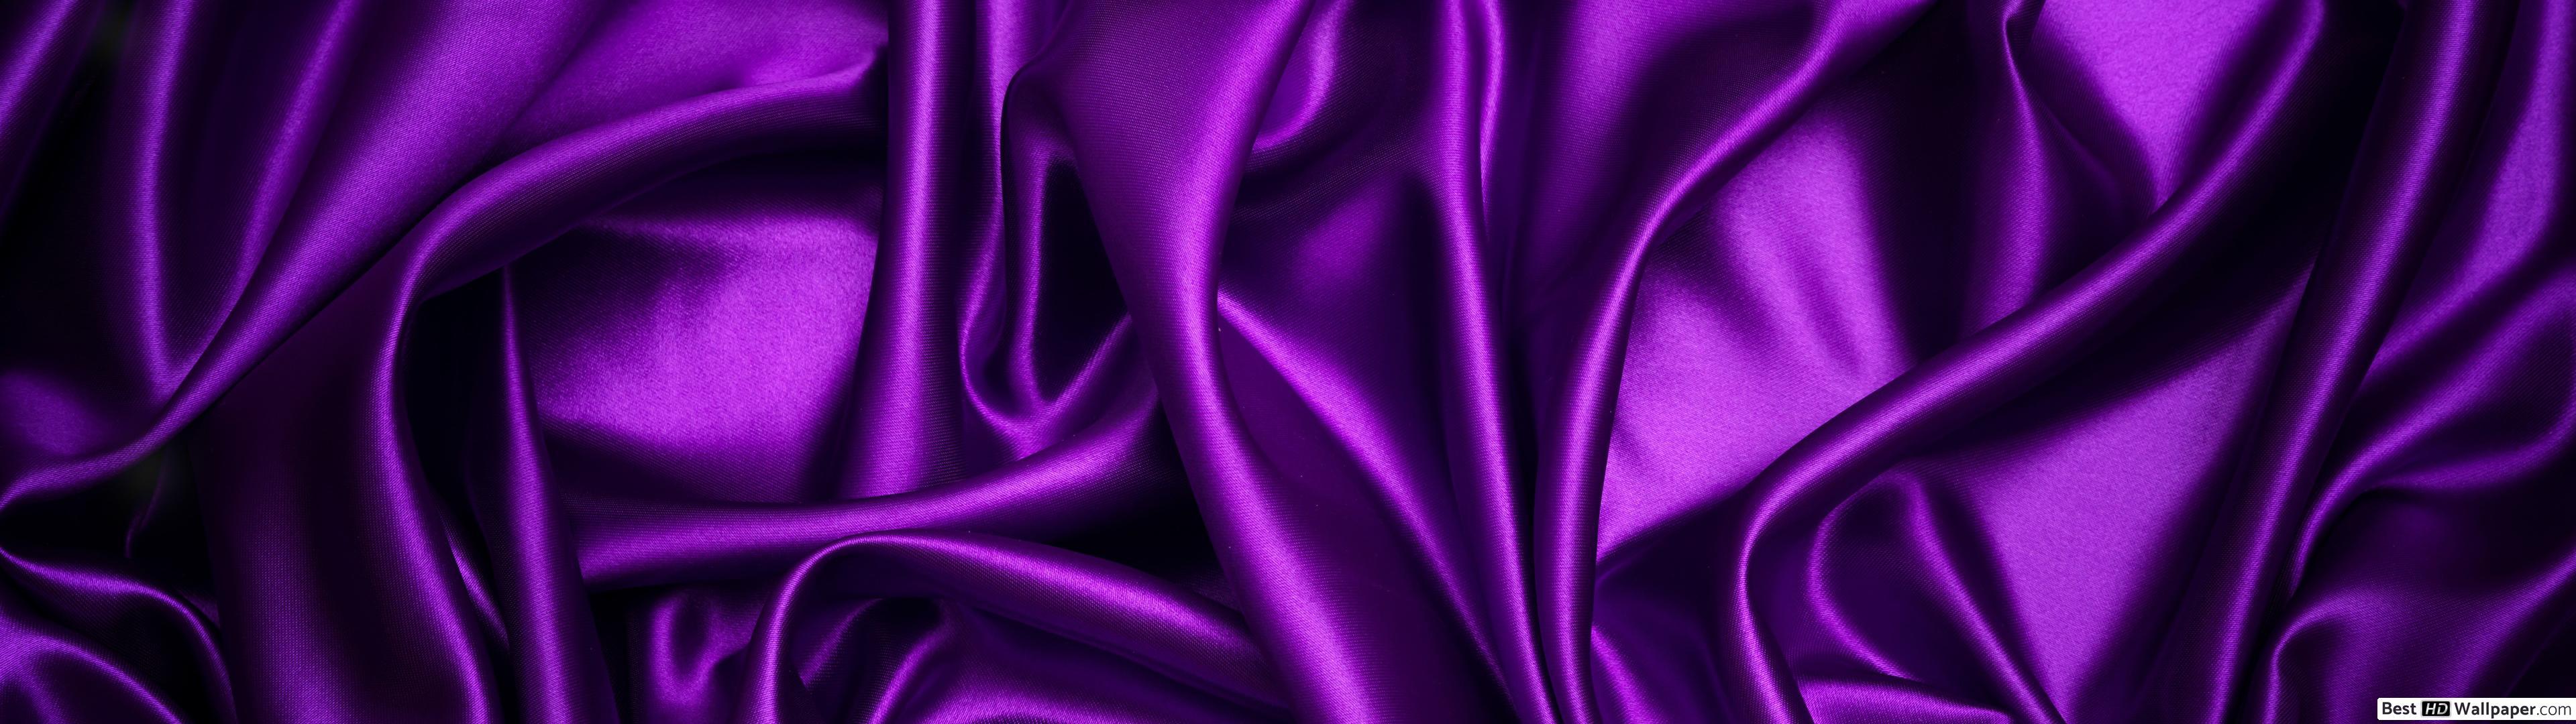 Purple 3840x1080 Wallpapers Top Free Purple 3840x1080 Backgrounds